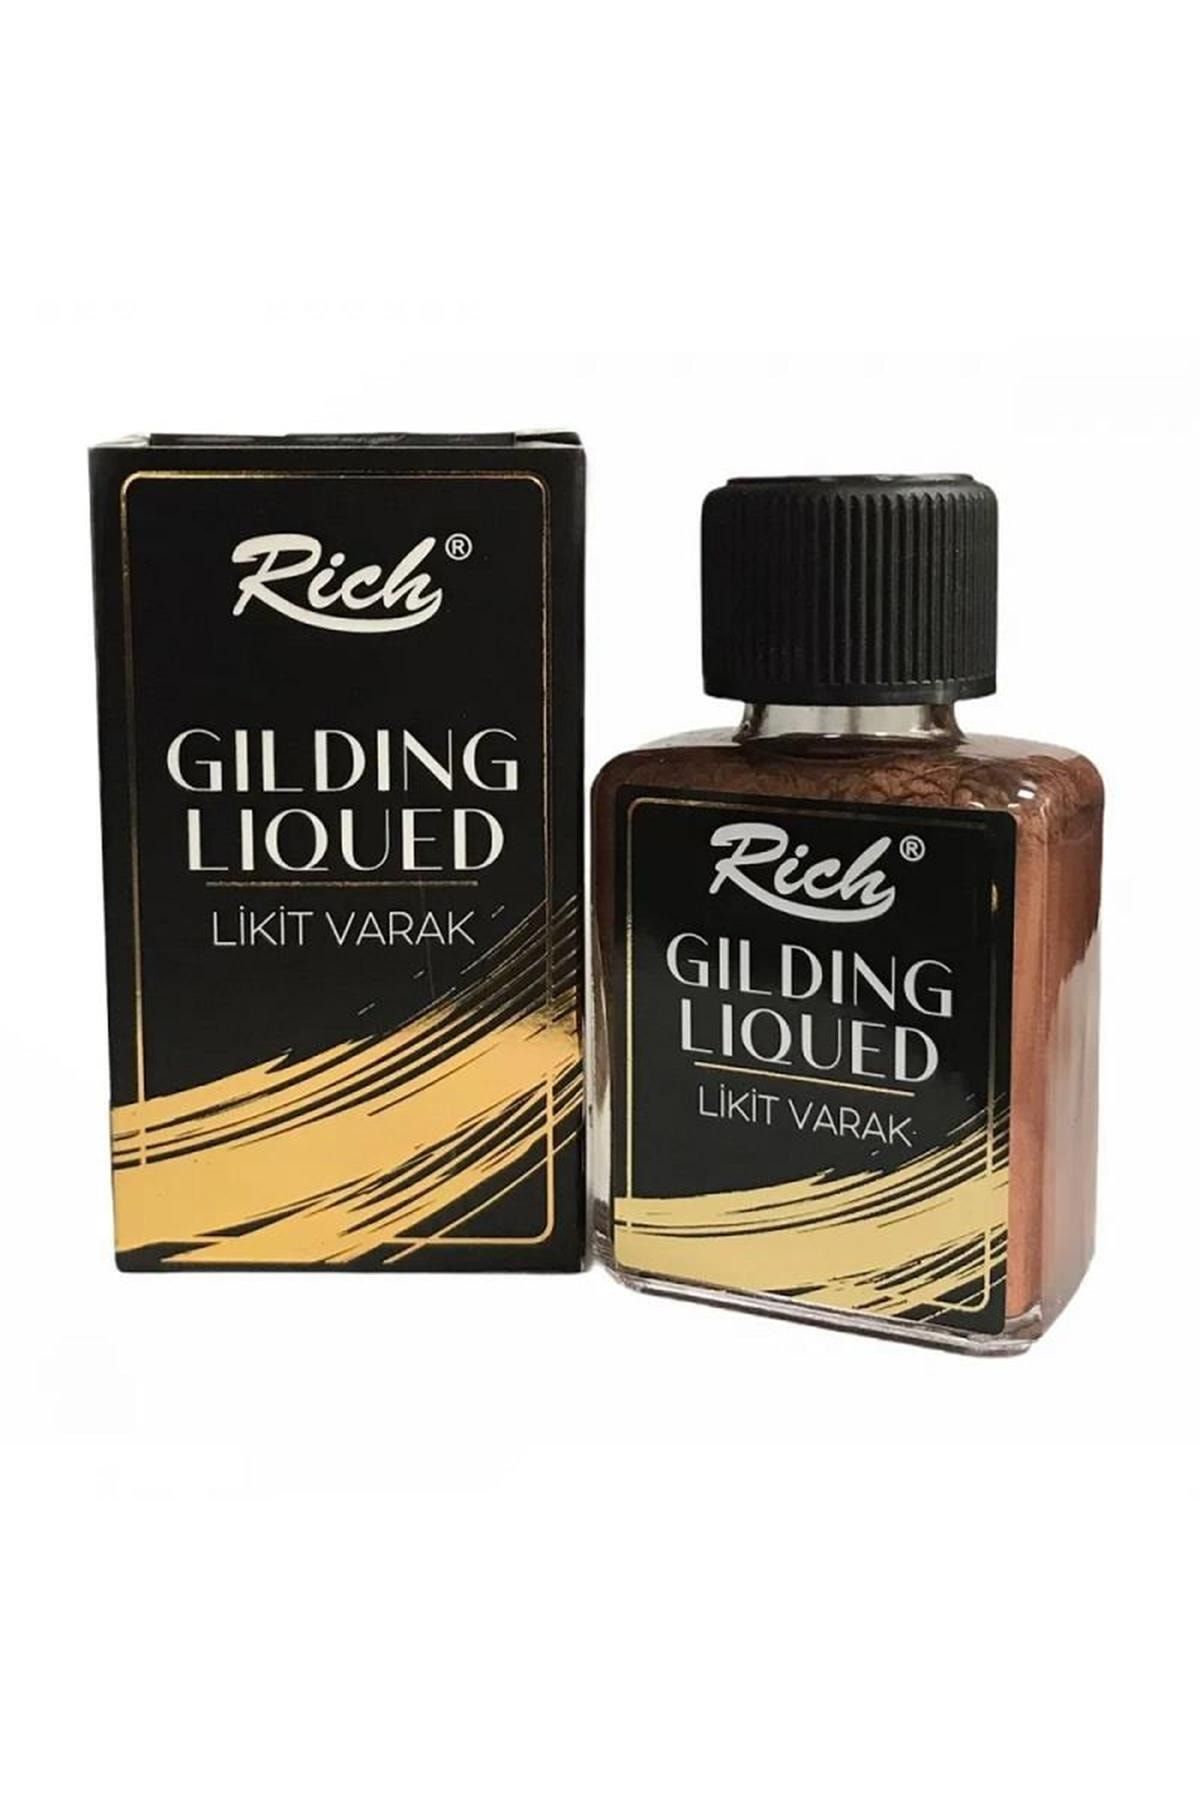 Rich Gilding Liqued (likit Varak) Bakır 09680